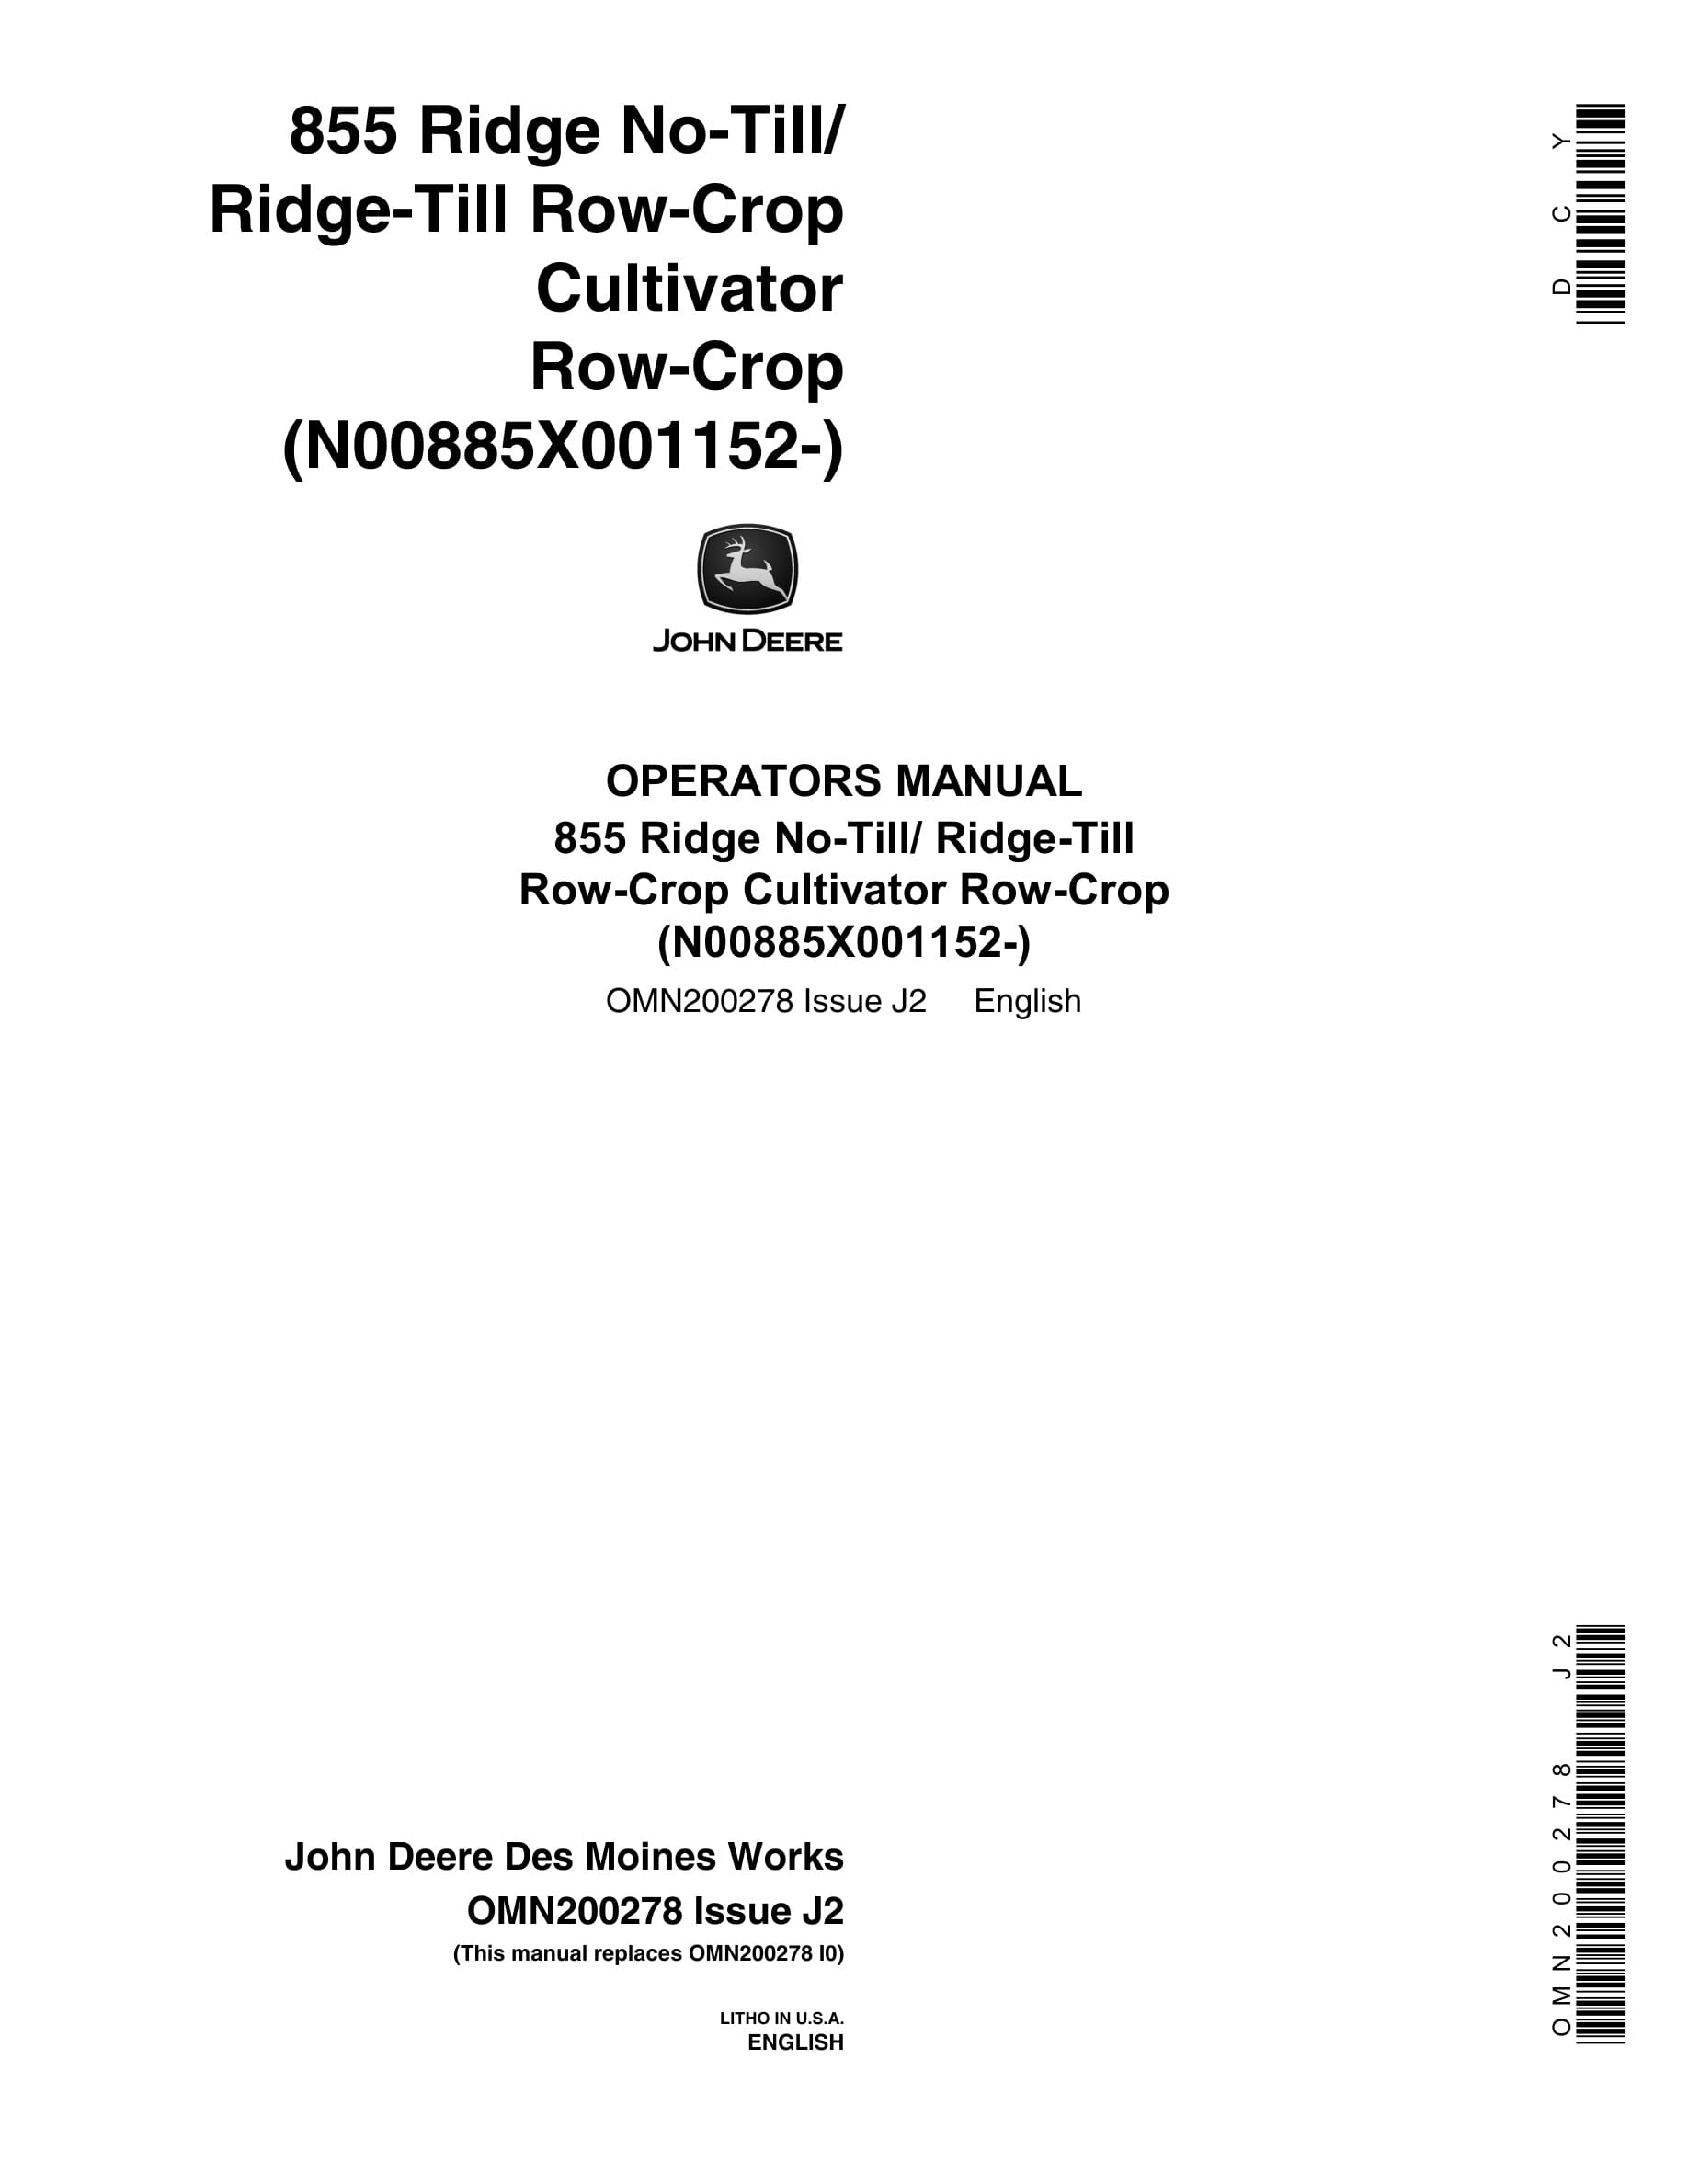 John Deere 855 Ridge No-Till Ridge-Till Row-Crop CULTIVATOR Operator Manual OMN200278-1